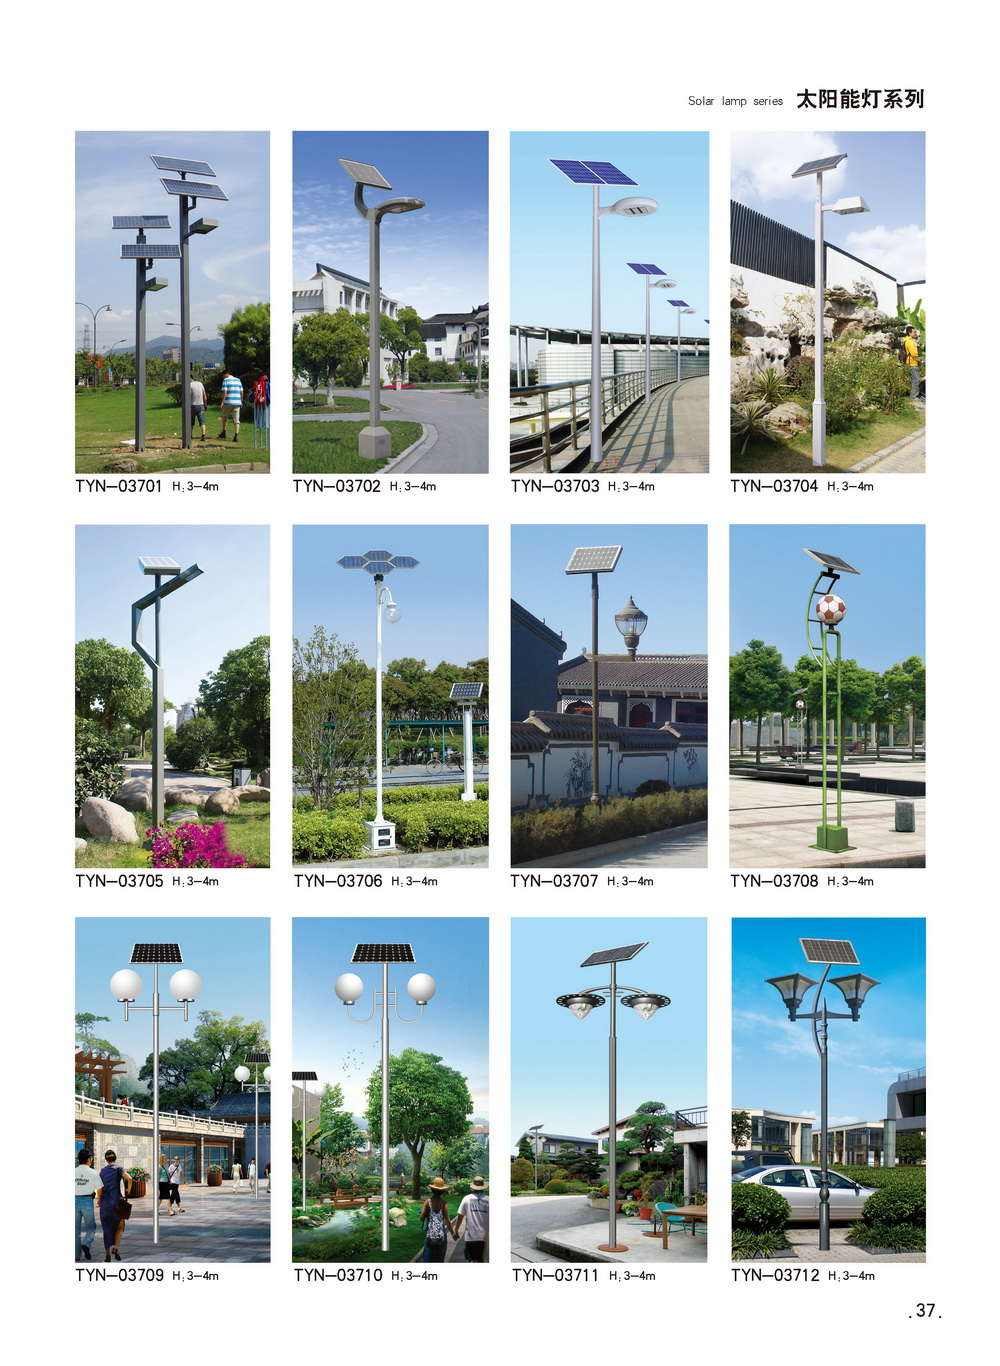 Courtyard solar lighting, outdoor waterproof, human sensing solar street light integration